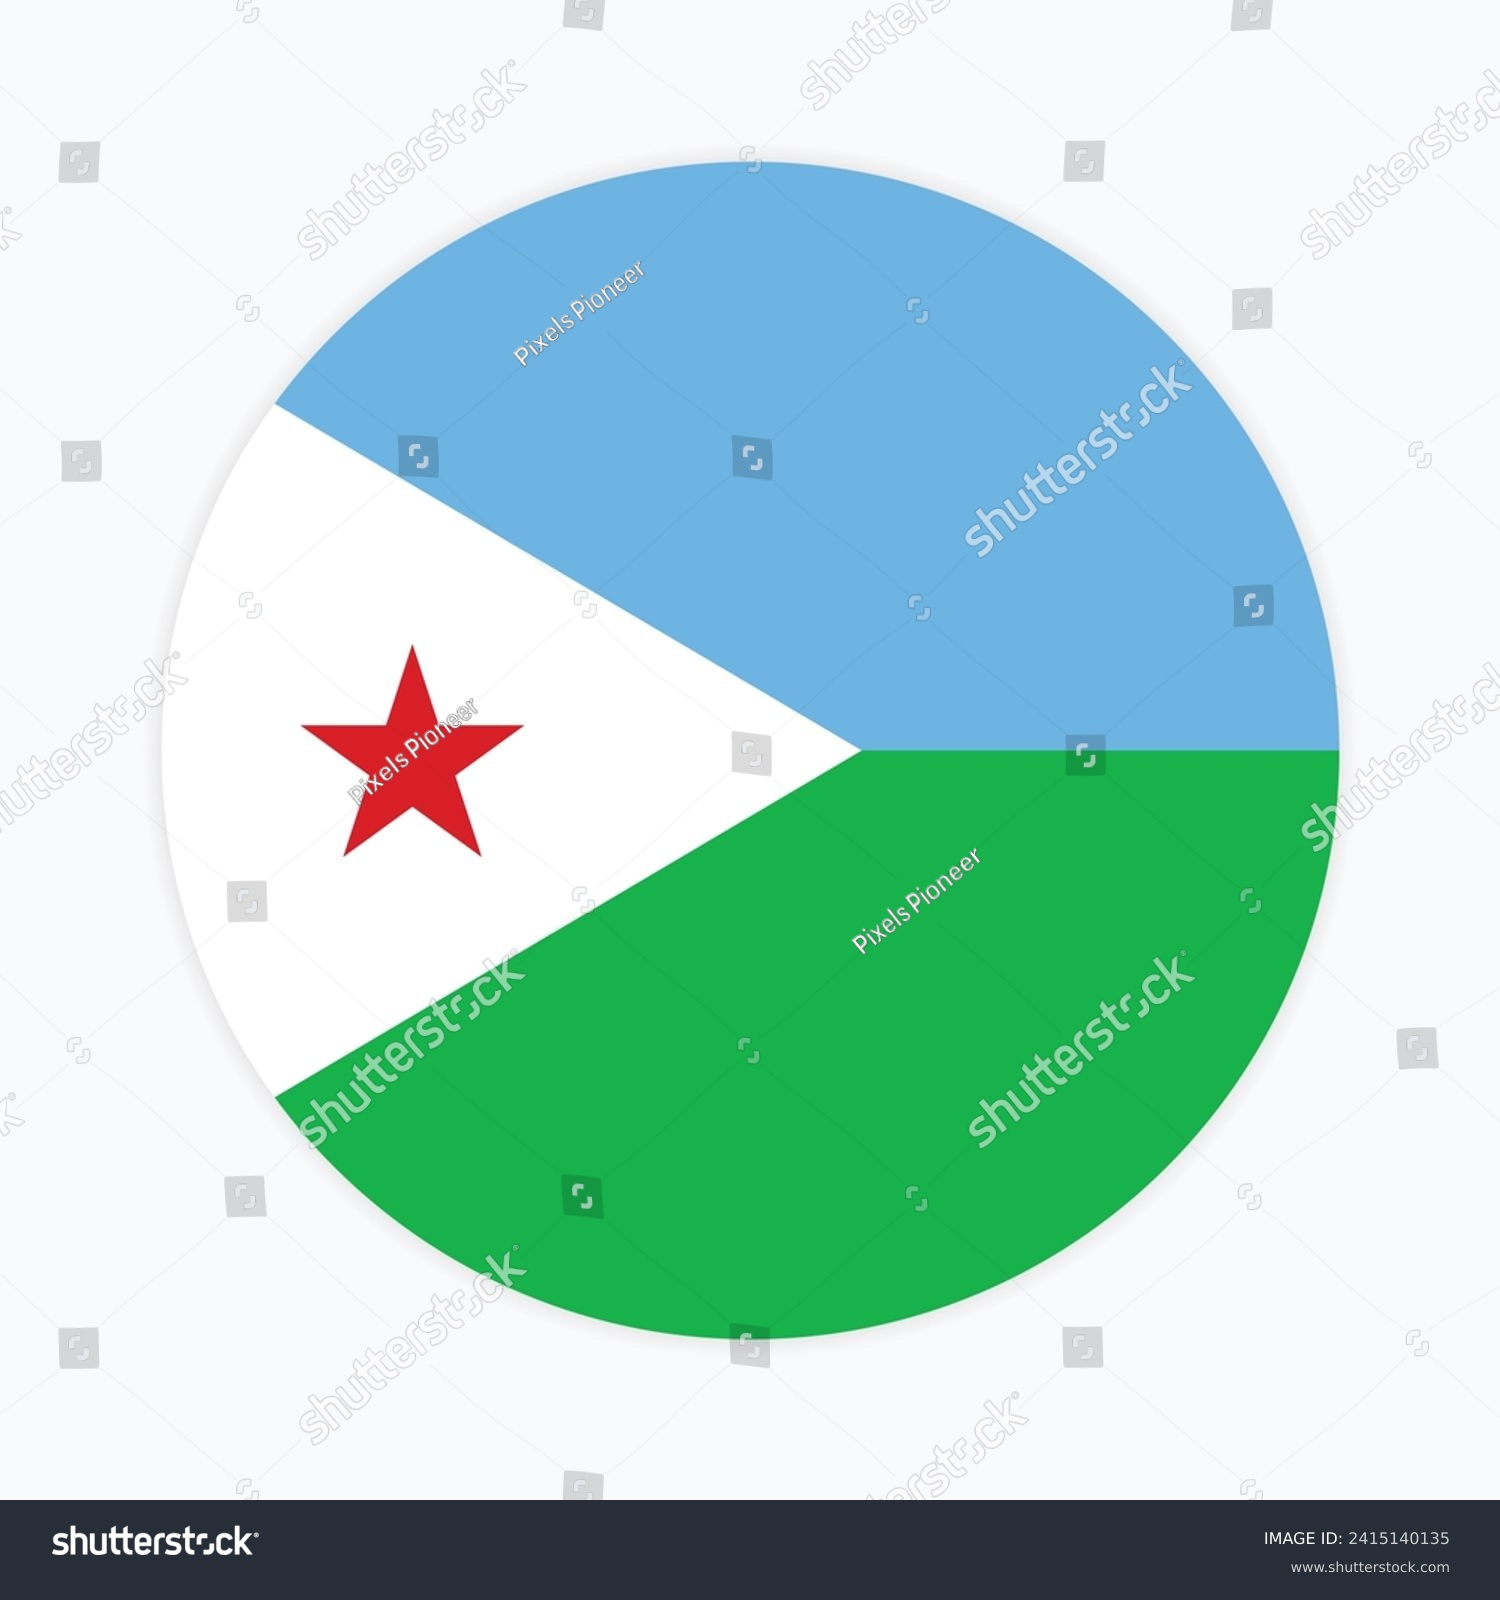 SVG of Djibouti national flag vector icon design. Djibouti circle flag. Round of Djibouti flag.
 svg